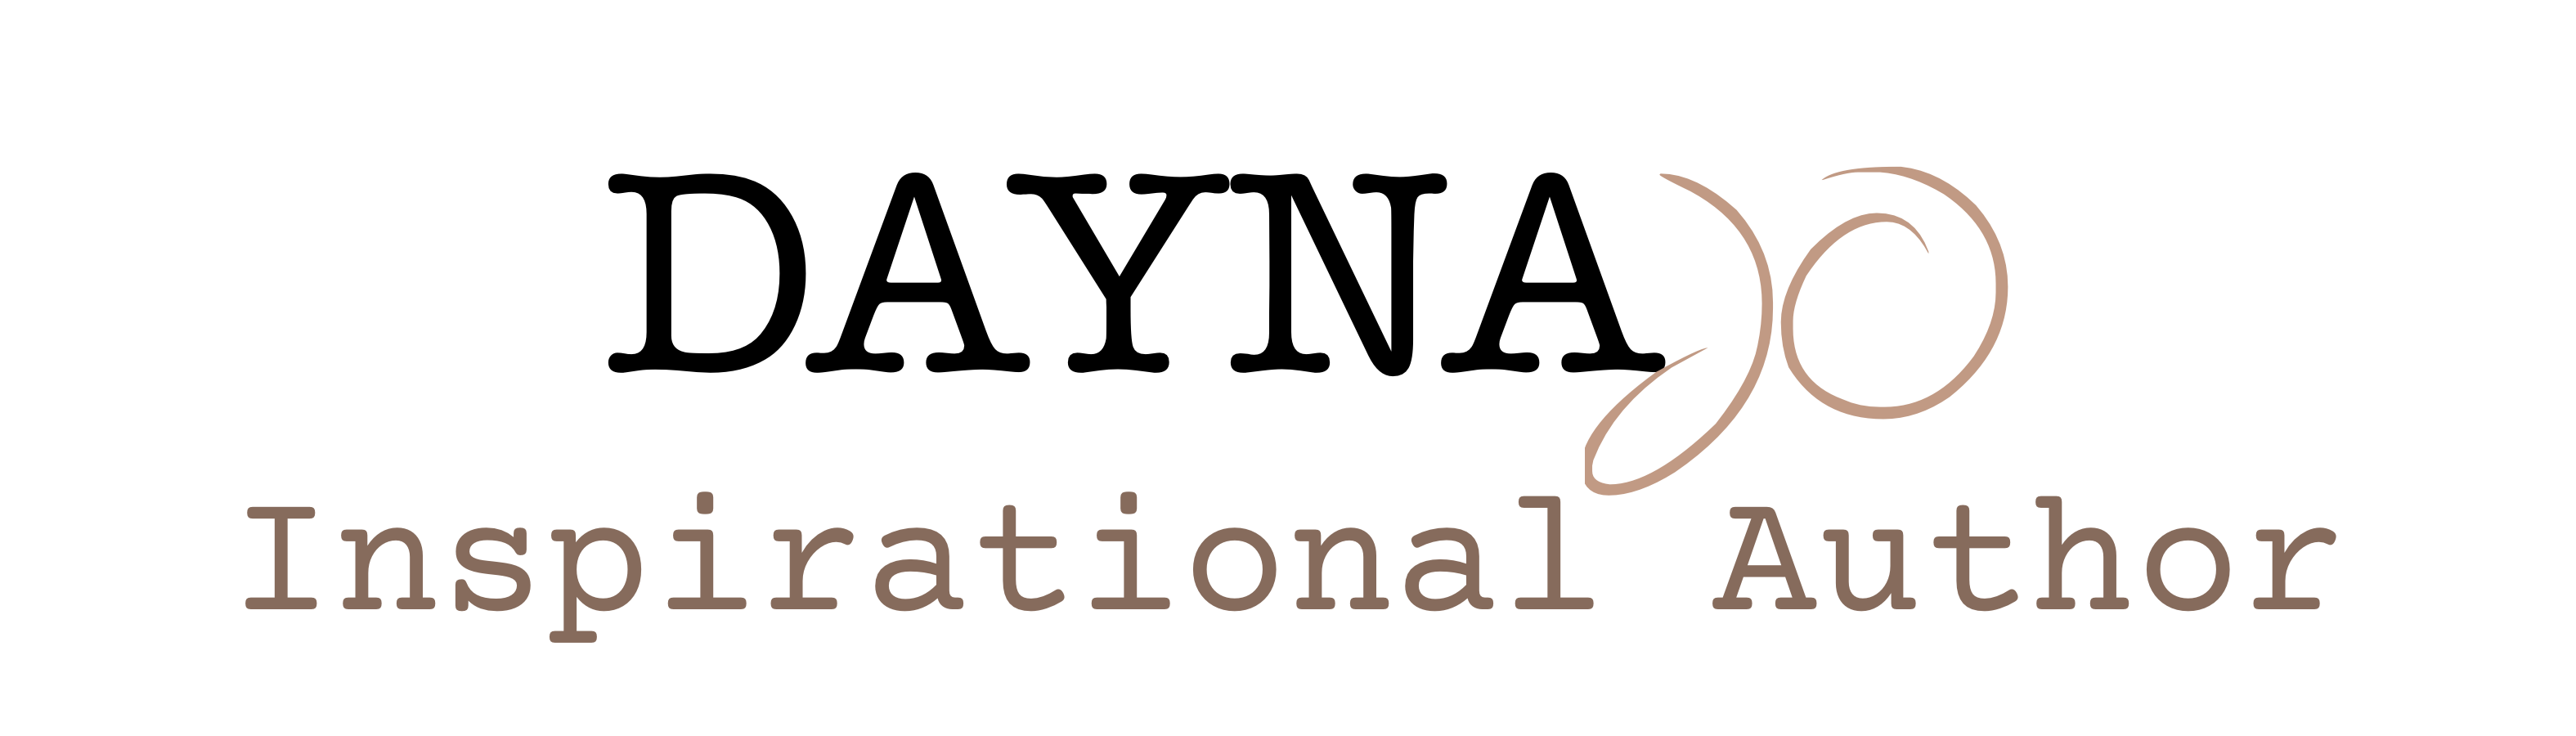 Dayna Jo Mason – Inspirational Author